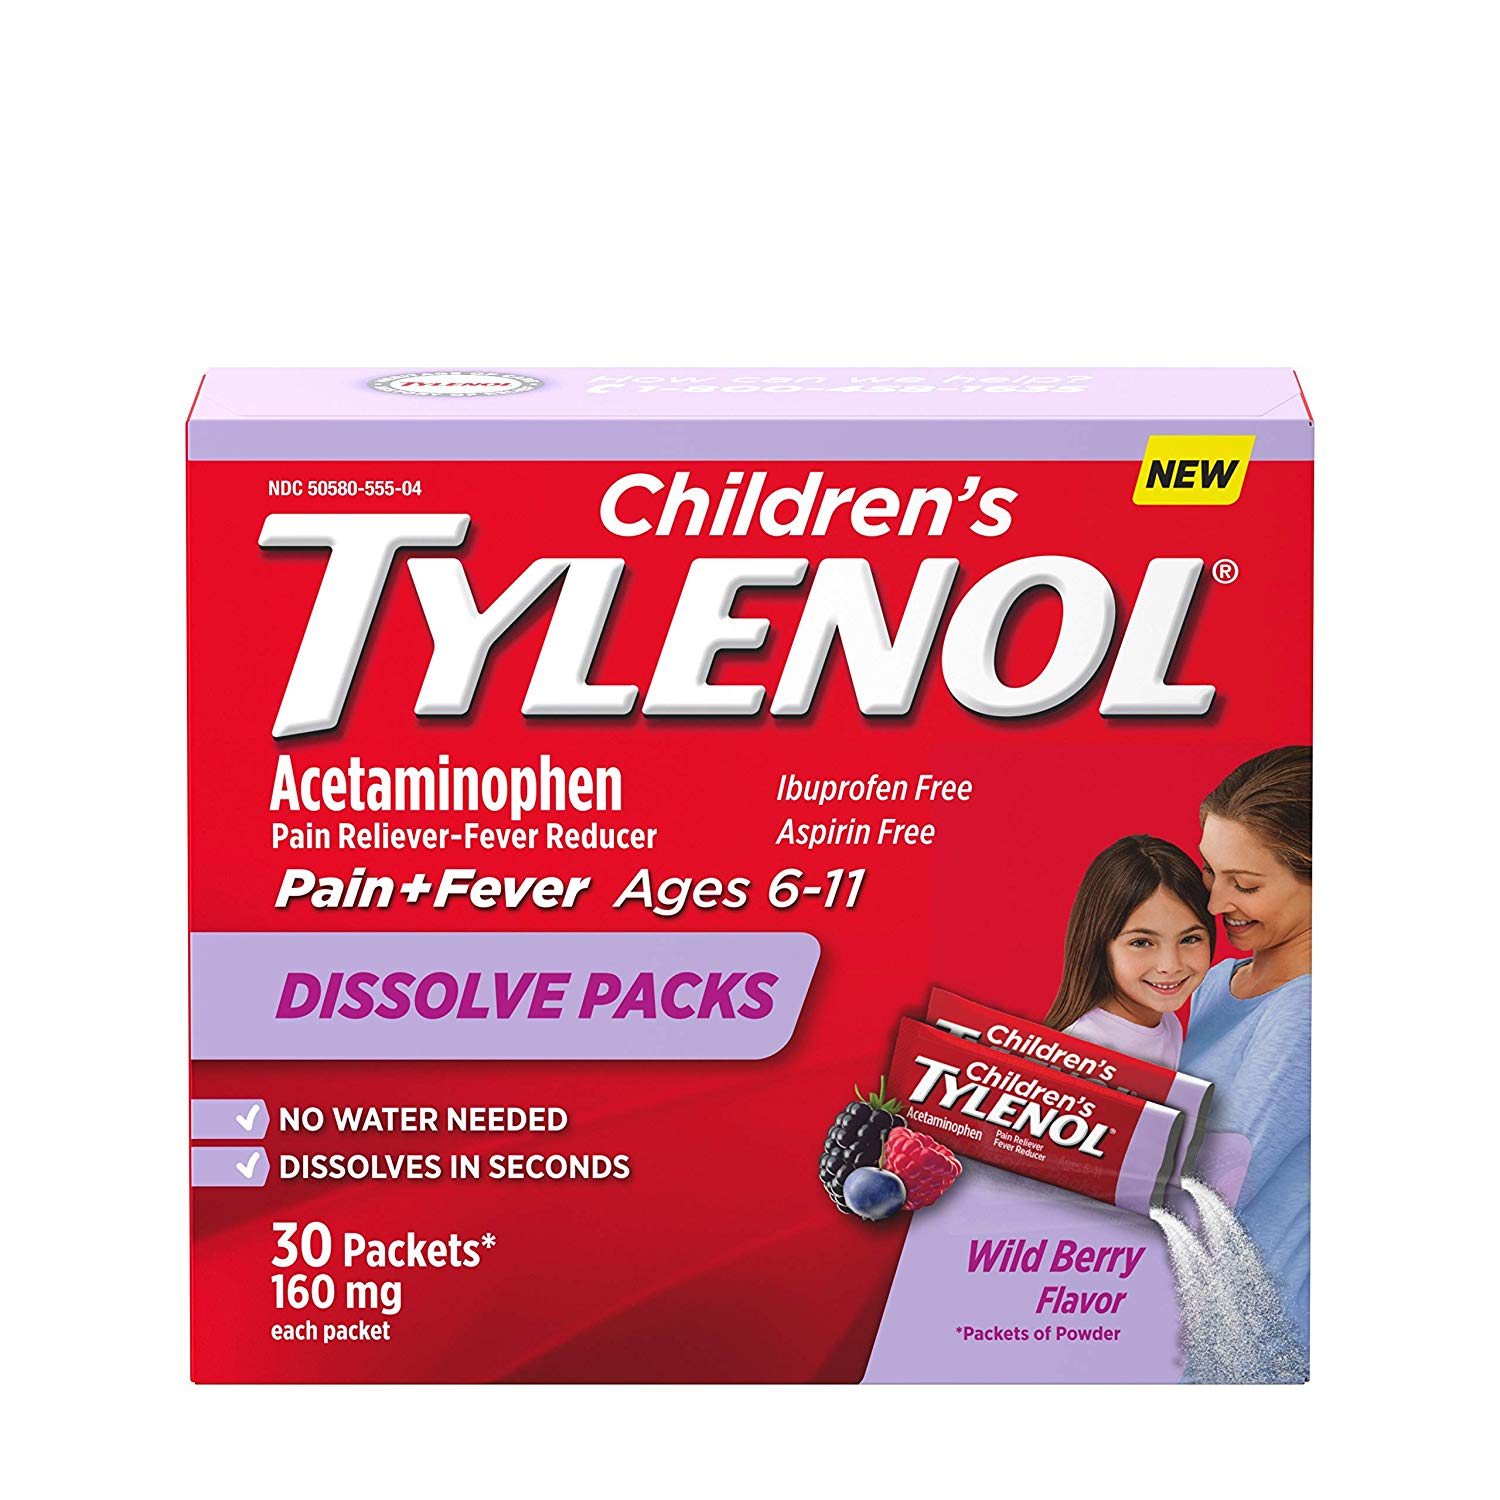 muca mist antidote for tylenol